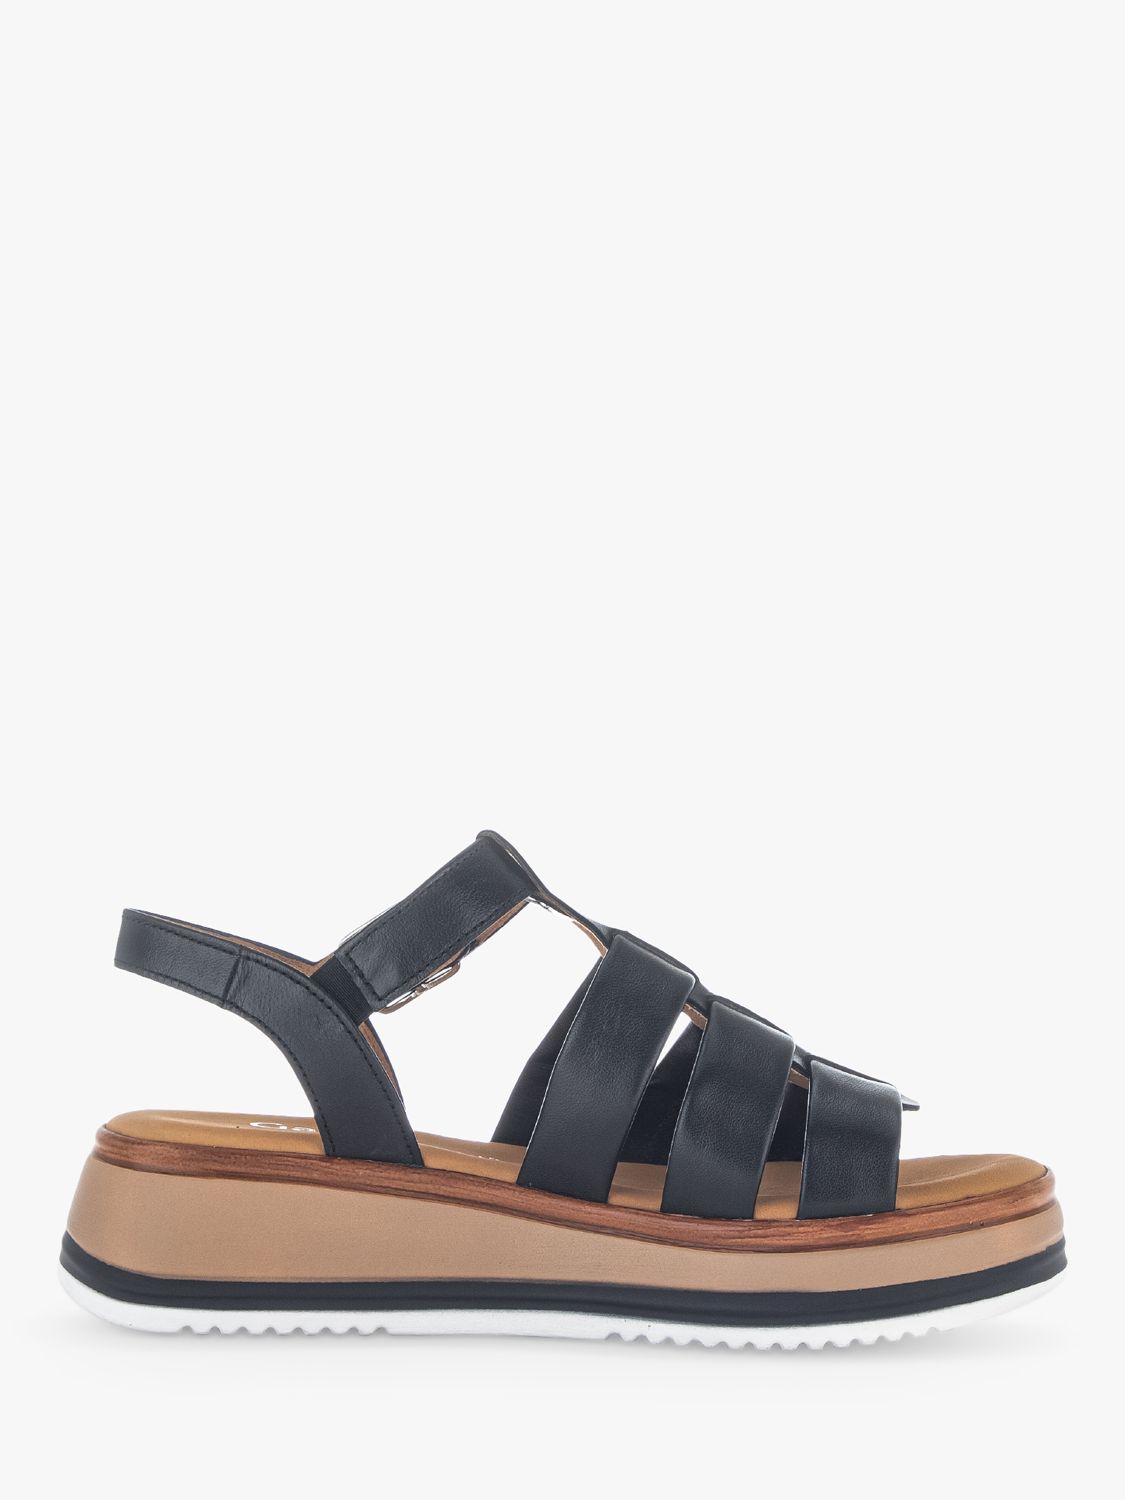 Gabor Ahoy Leather Sandals, Black, 3